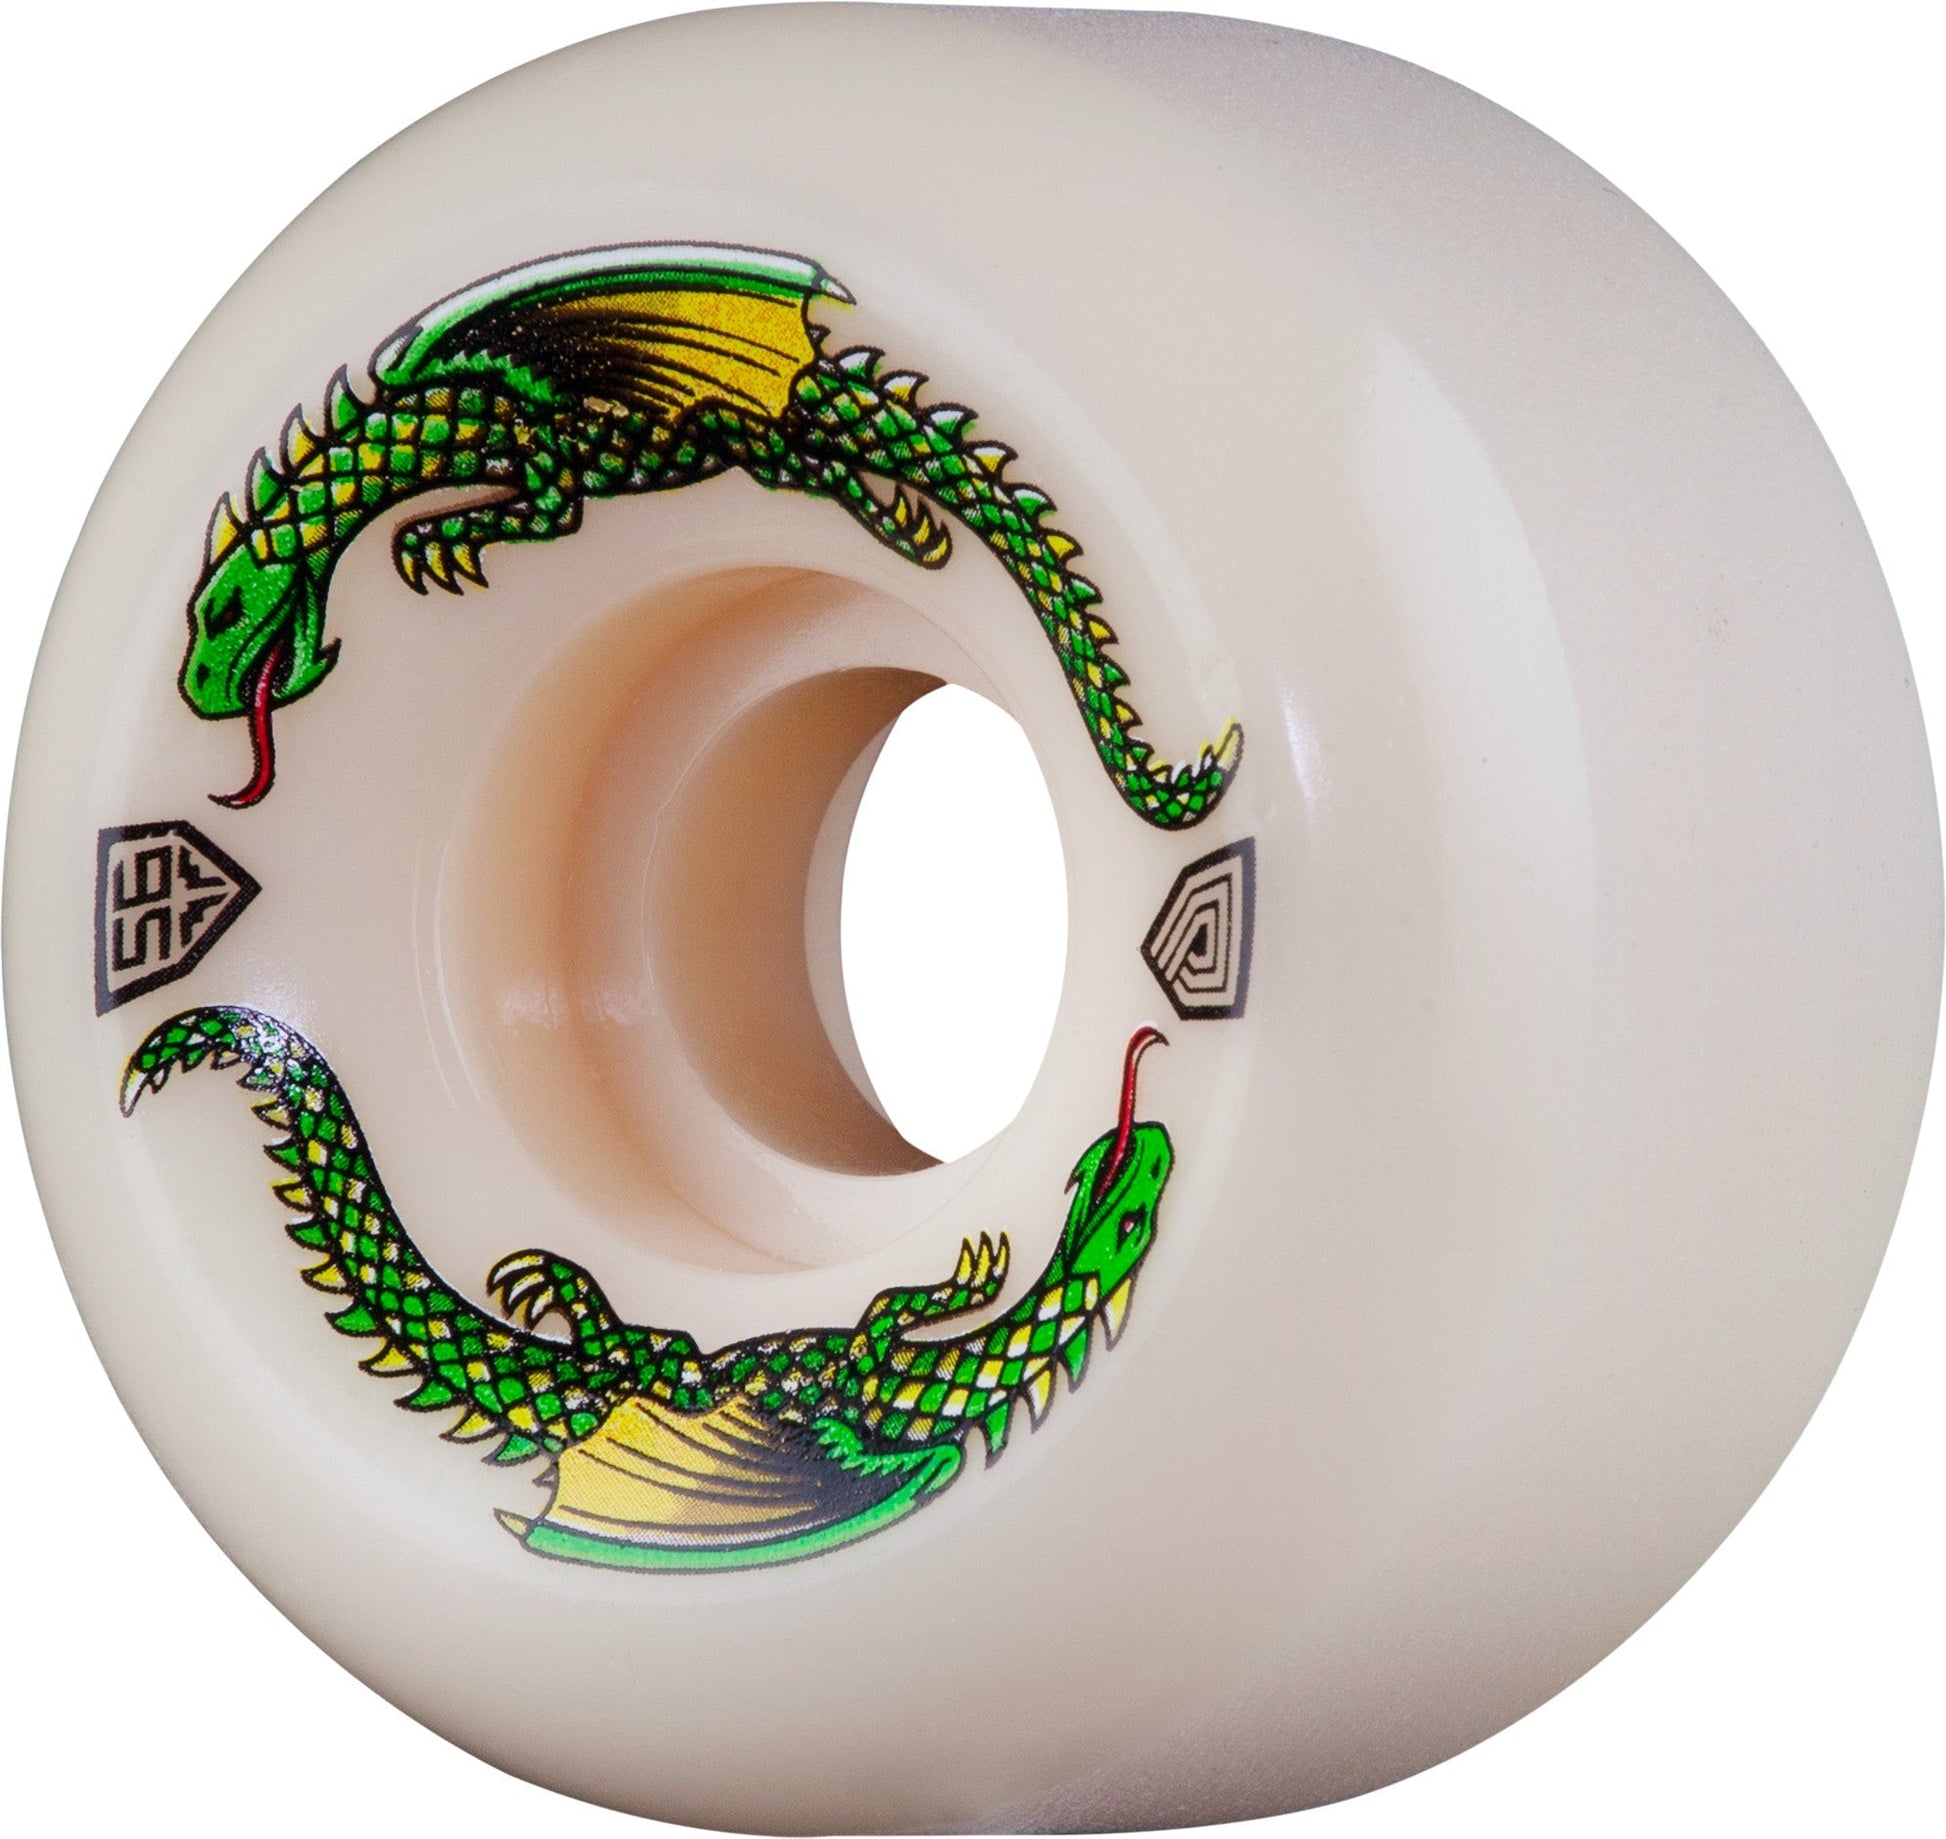 Powell Peralta Dragon Formula Green Dragon Skateboard Wheels - Motion Boardshop